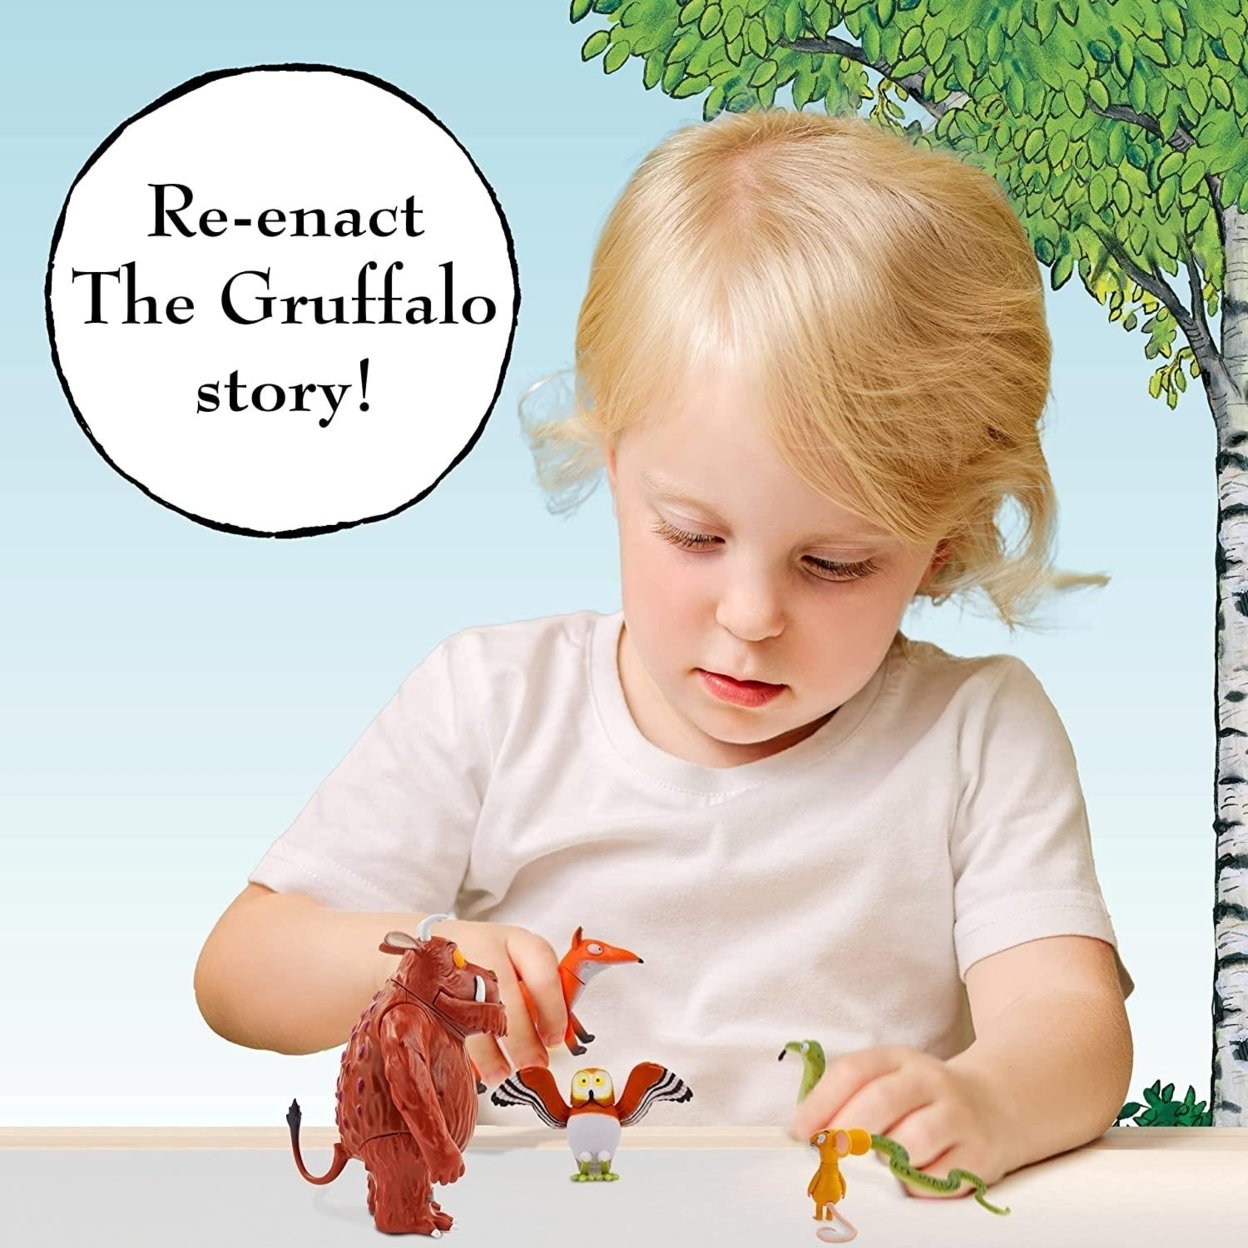 The Gruffalo Story Time Family Julia Donaldson Book Character Figure Set WOW! Stuff